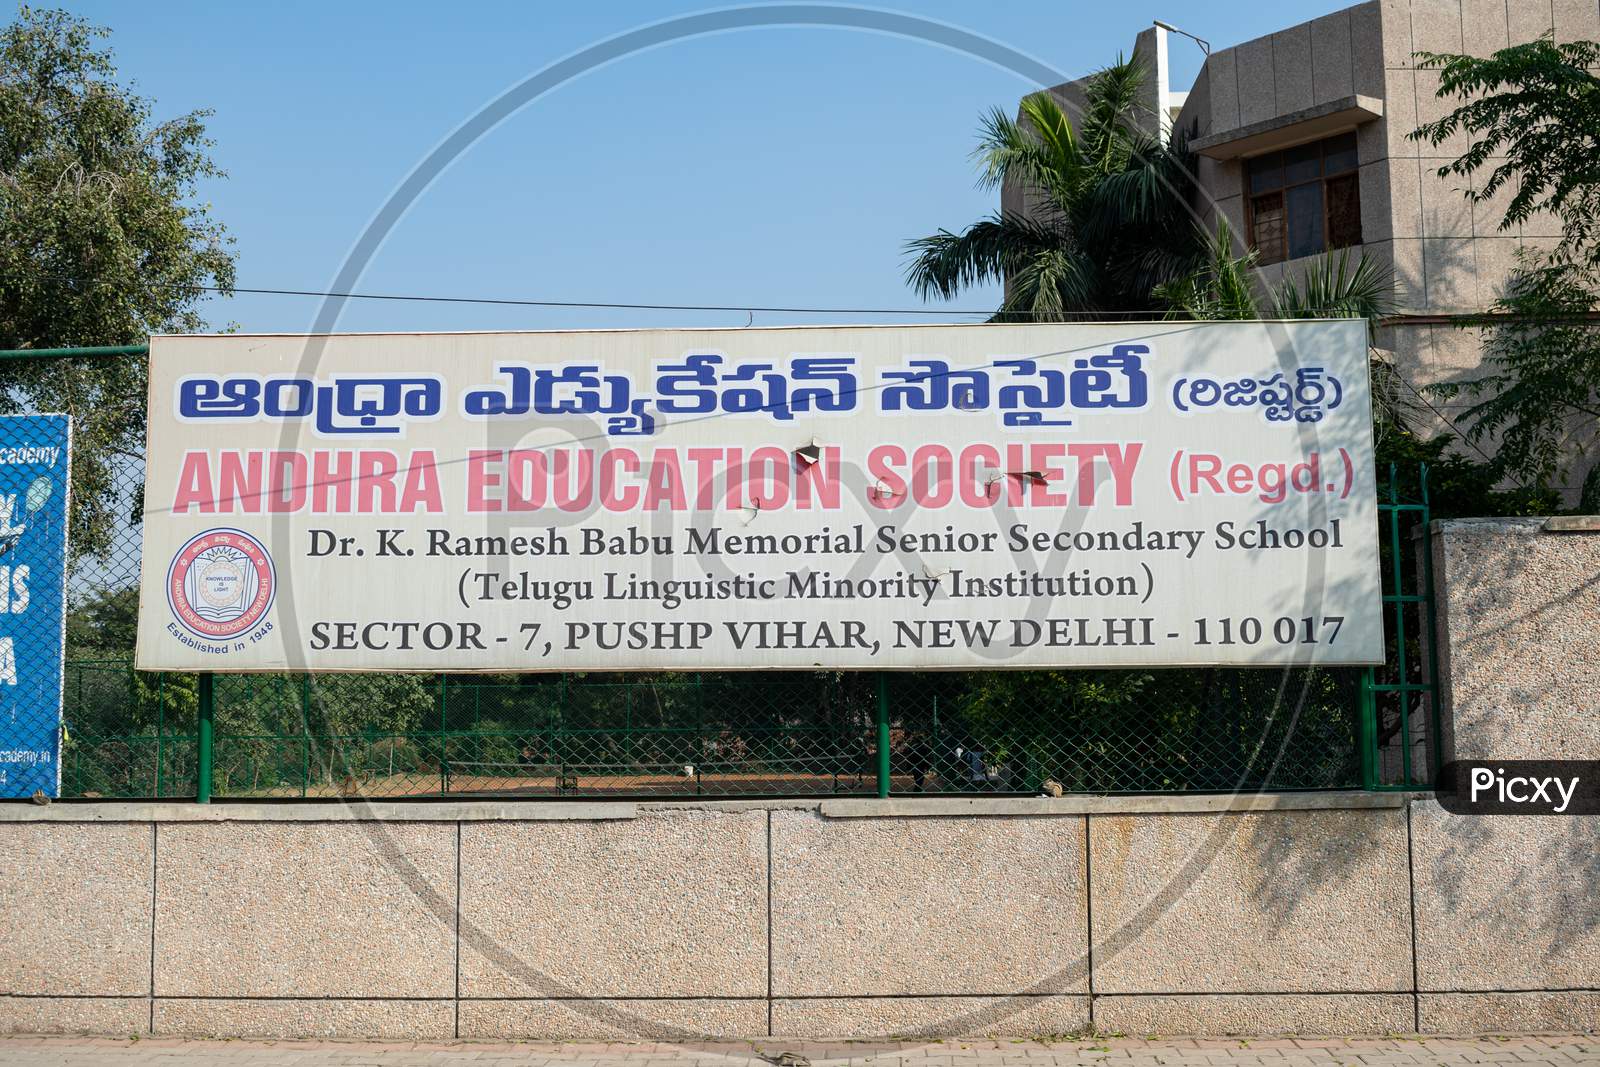 Andhra Education Society, Doctor K Ramesh Babu Memorial Senior Secondary School Pushp Vihar